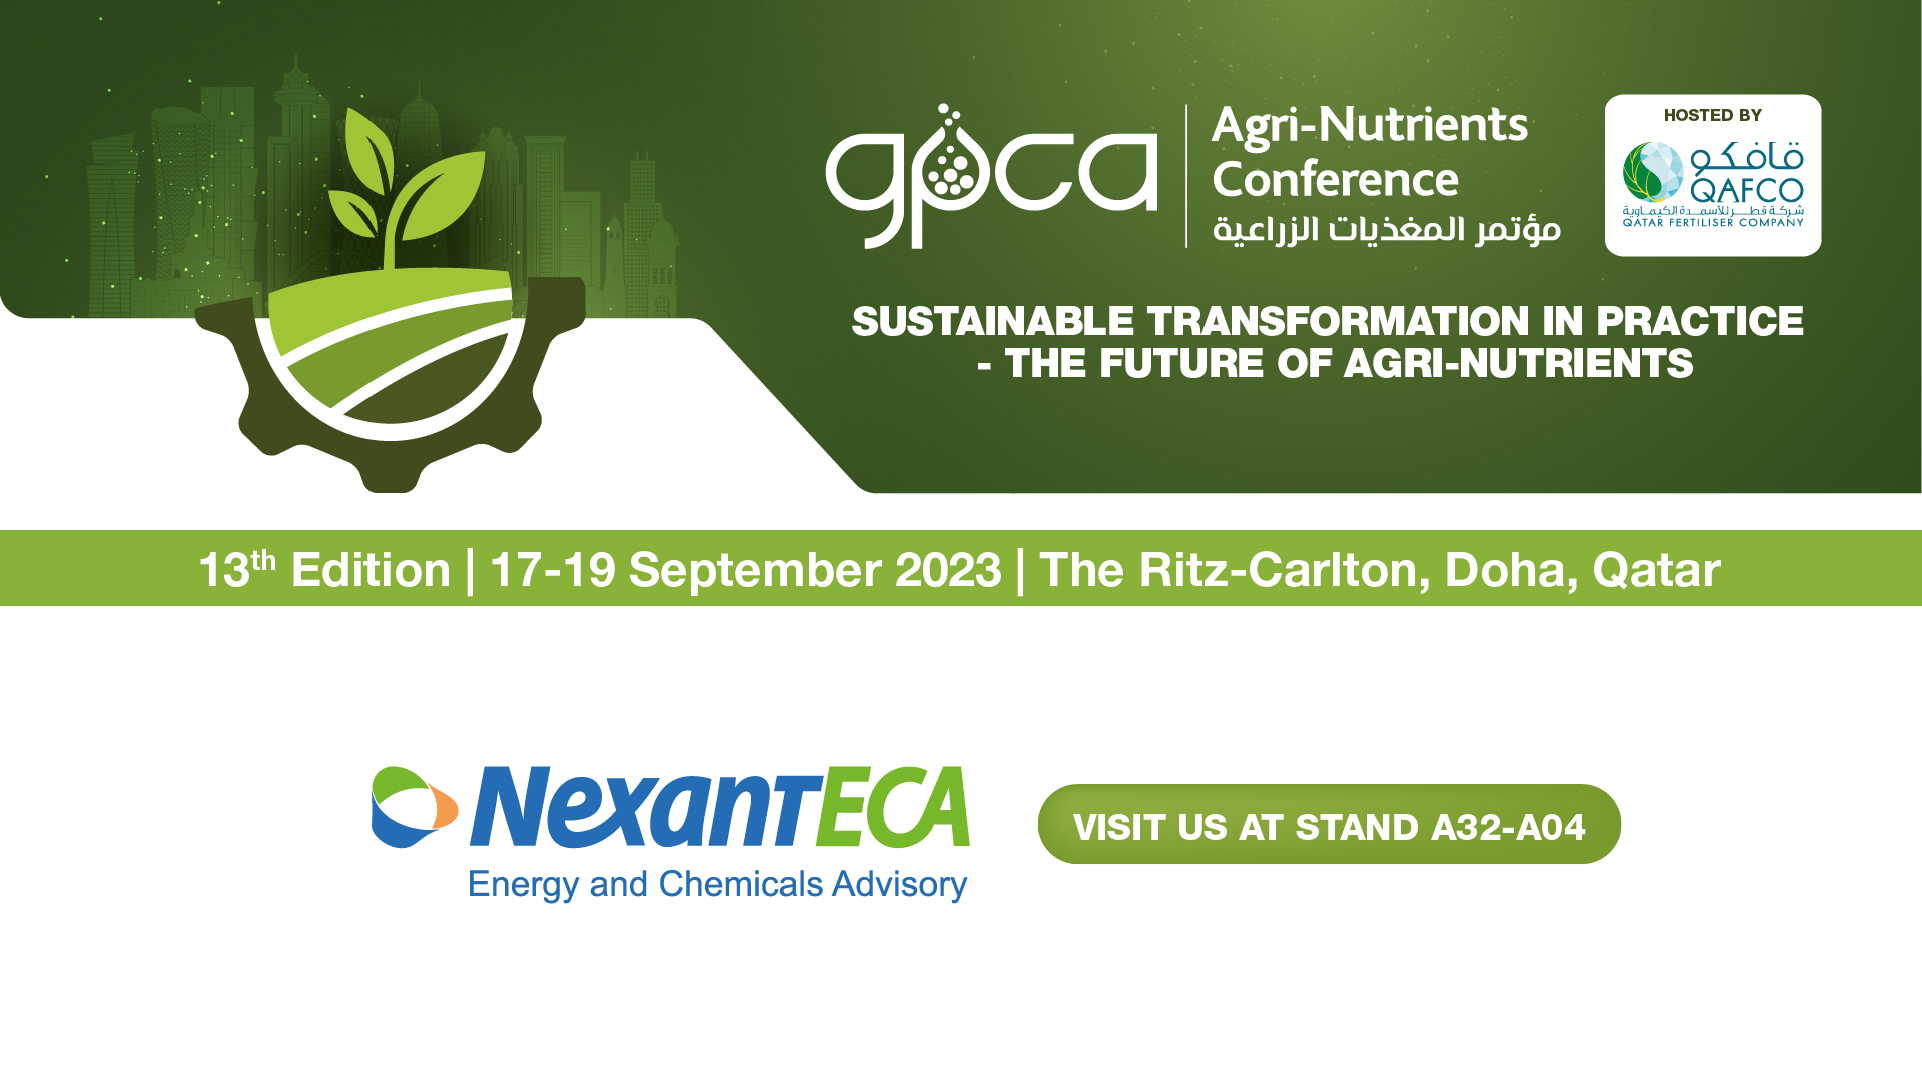 NEXANTECA GPCA Agri-Nutrients Conference